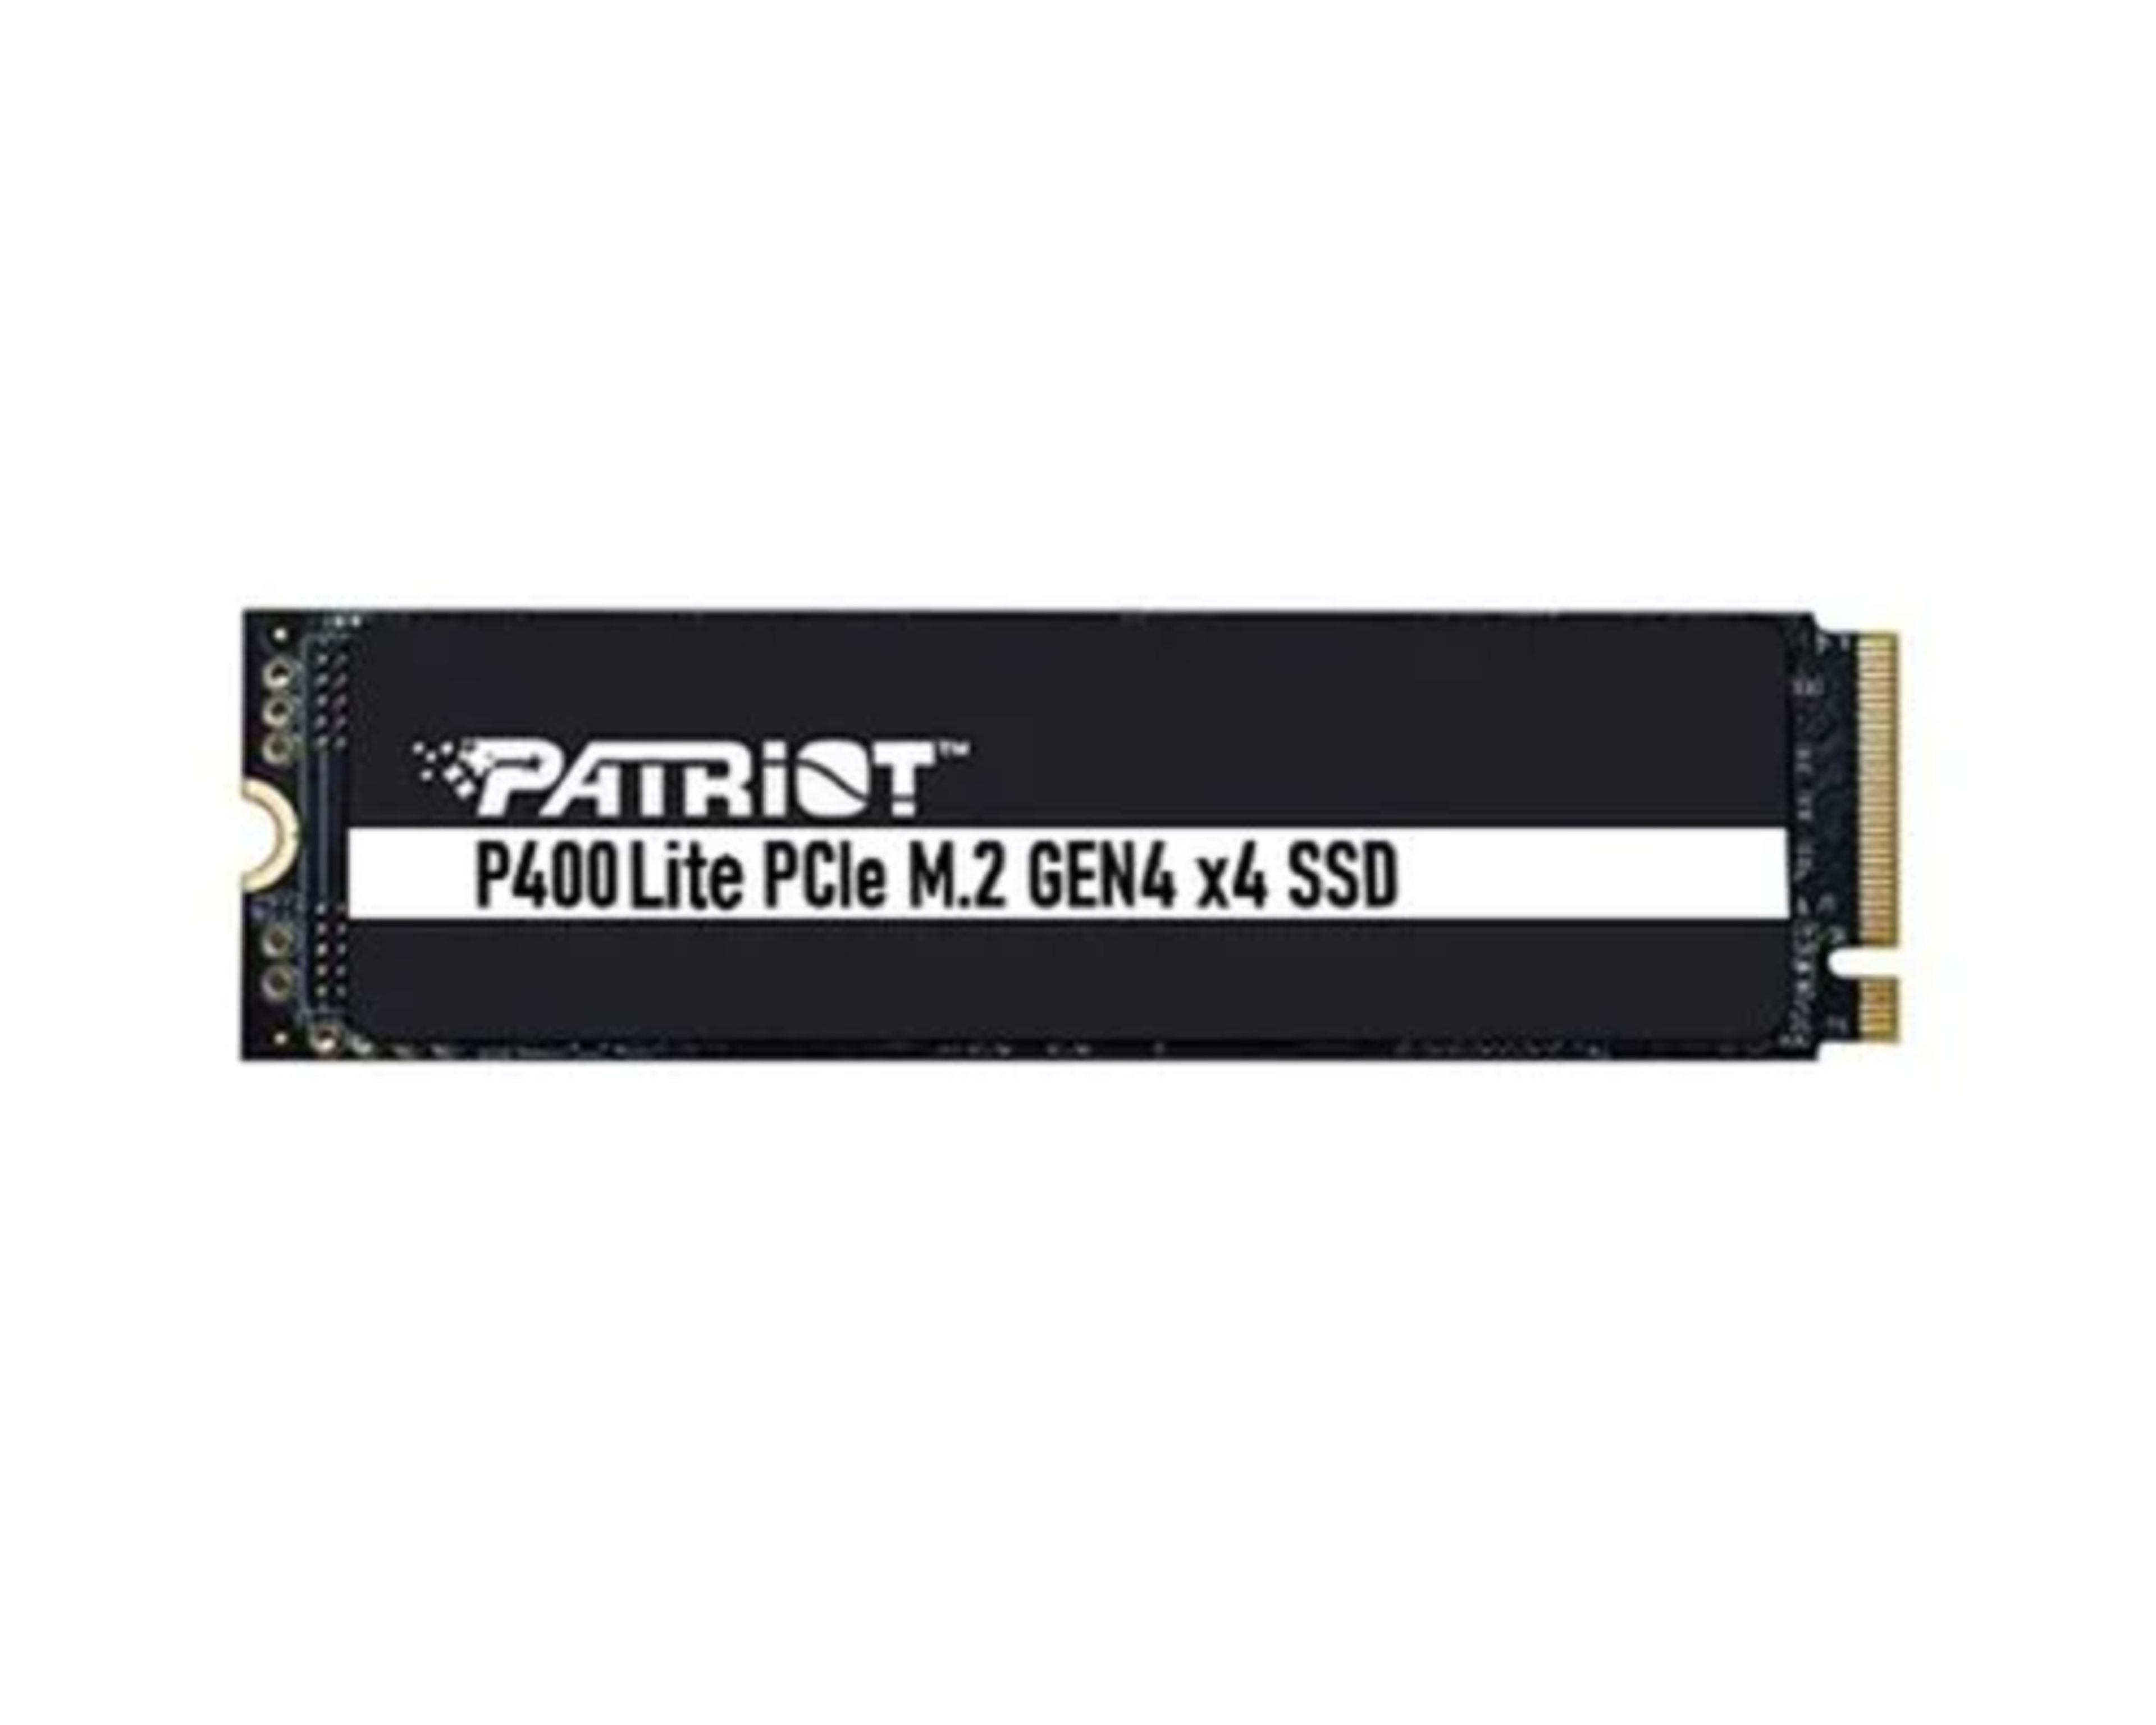 Patriot P400 Lite 250GB Internal SSD - NVMe PCIe Gen 4x4 - M.2 2280 - Solid State Drive